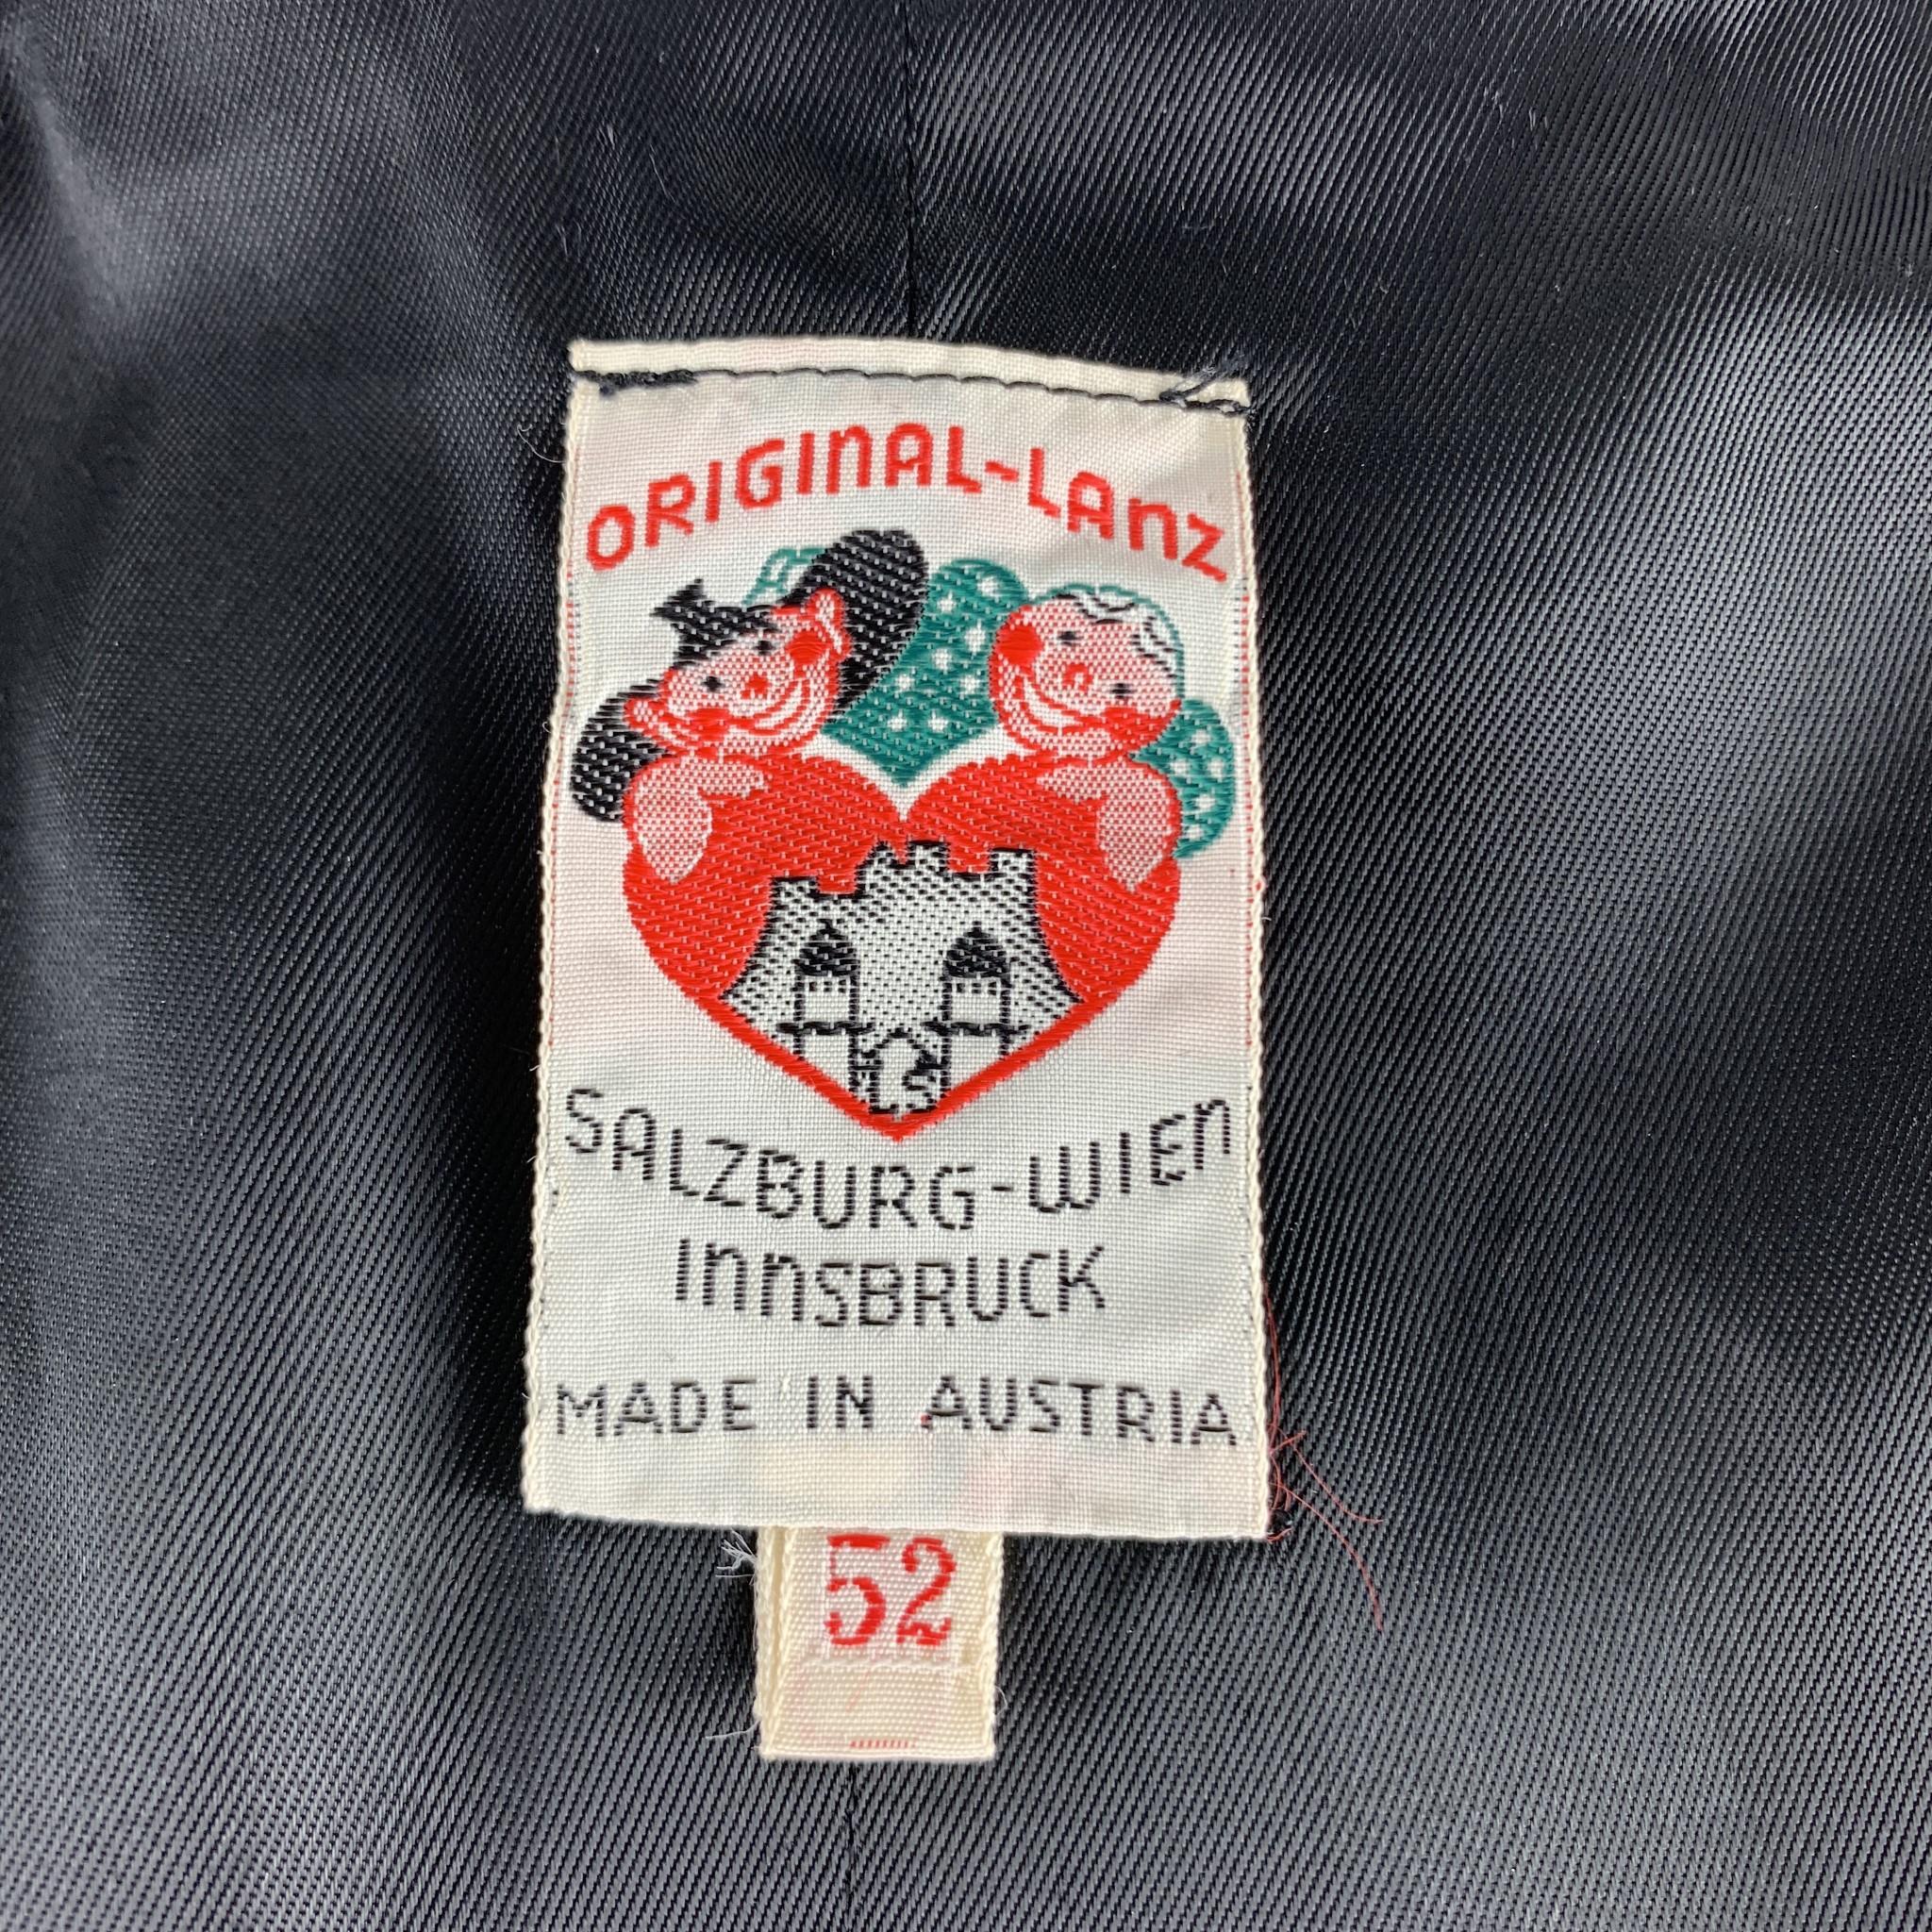 ORIGINAL-LANZ Size 42 Black Rosette Embroidery Velvet Metal Buttoned Vest 1